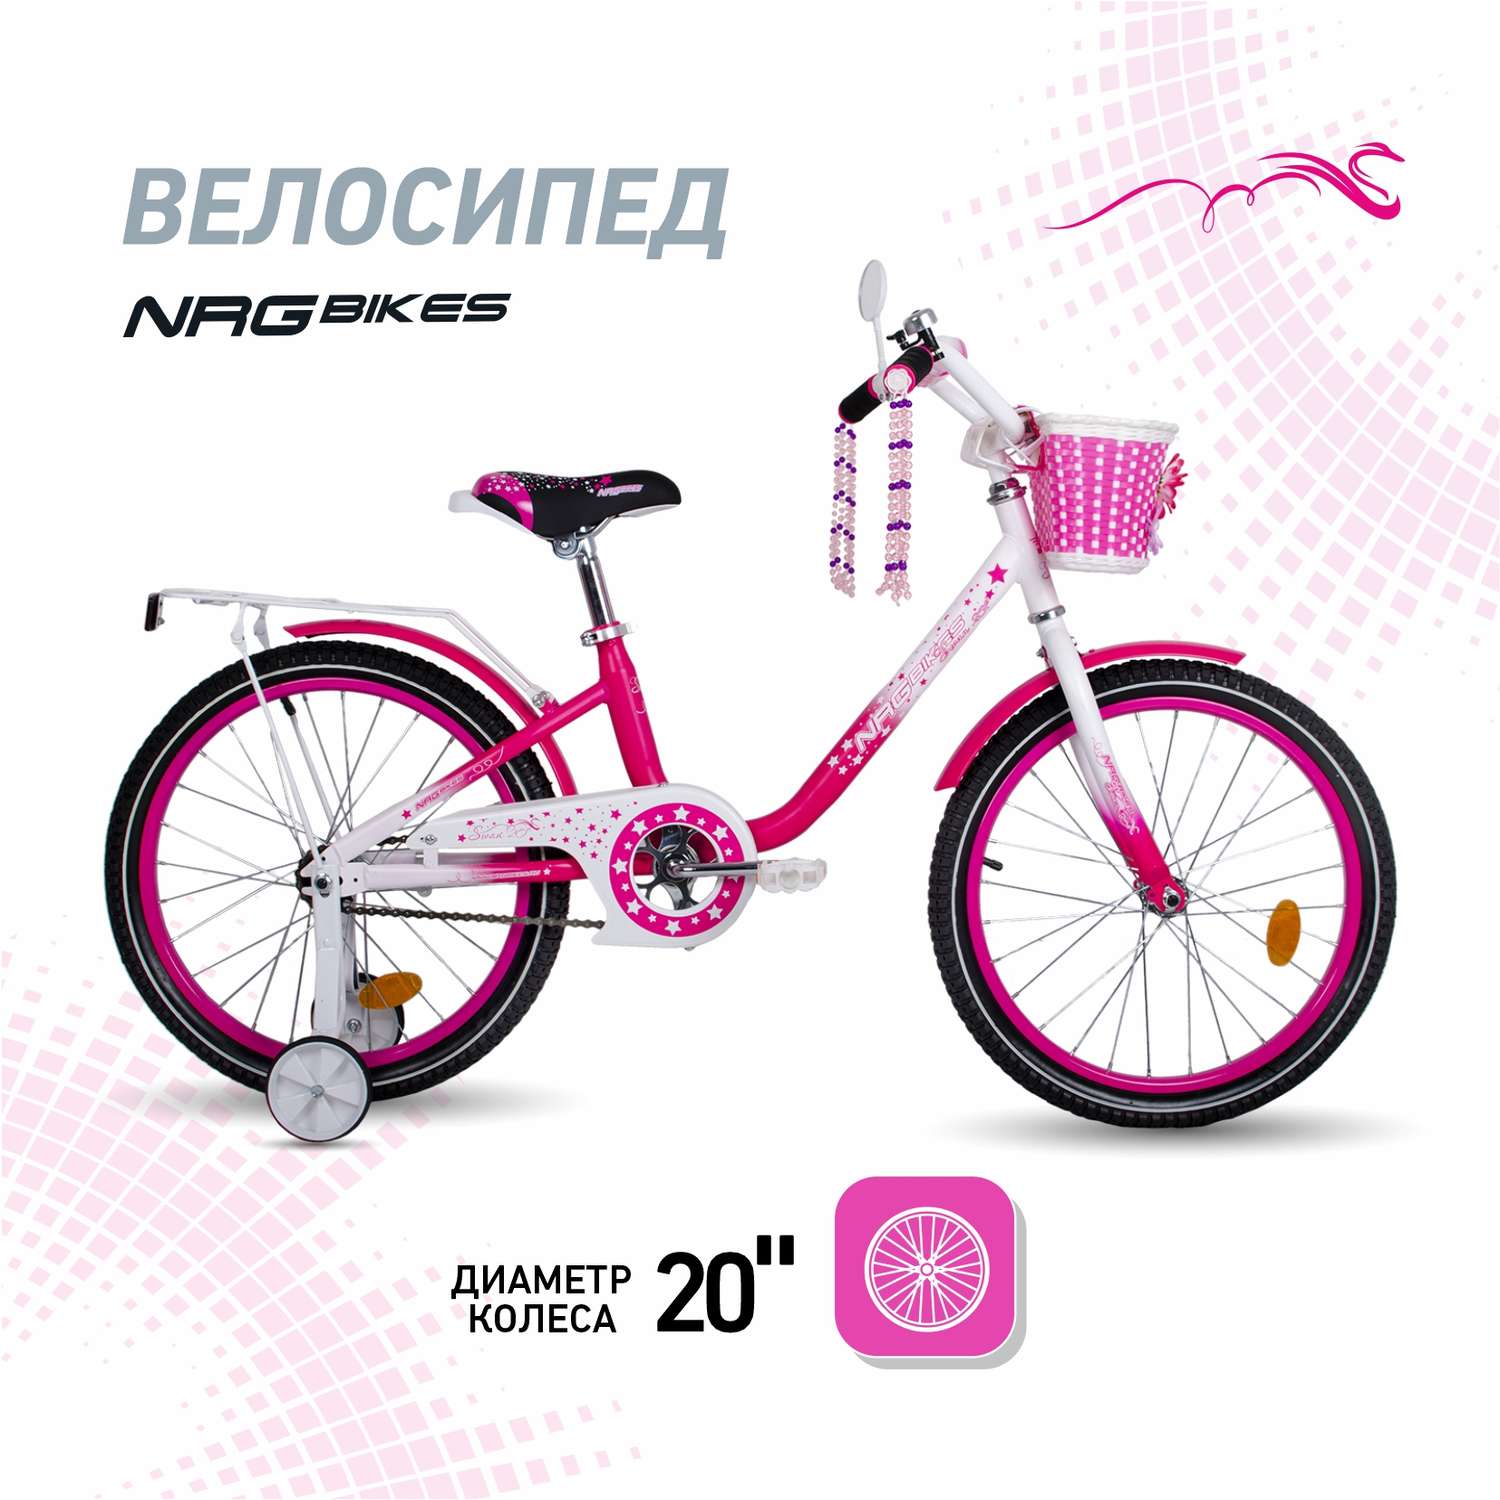 Велосипед NRG BIKES SWAN 20 pink-white - фото 1